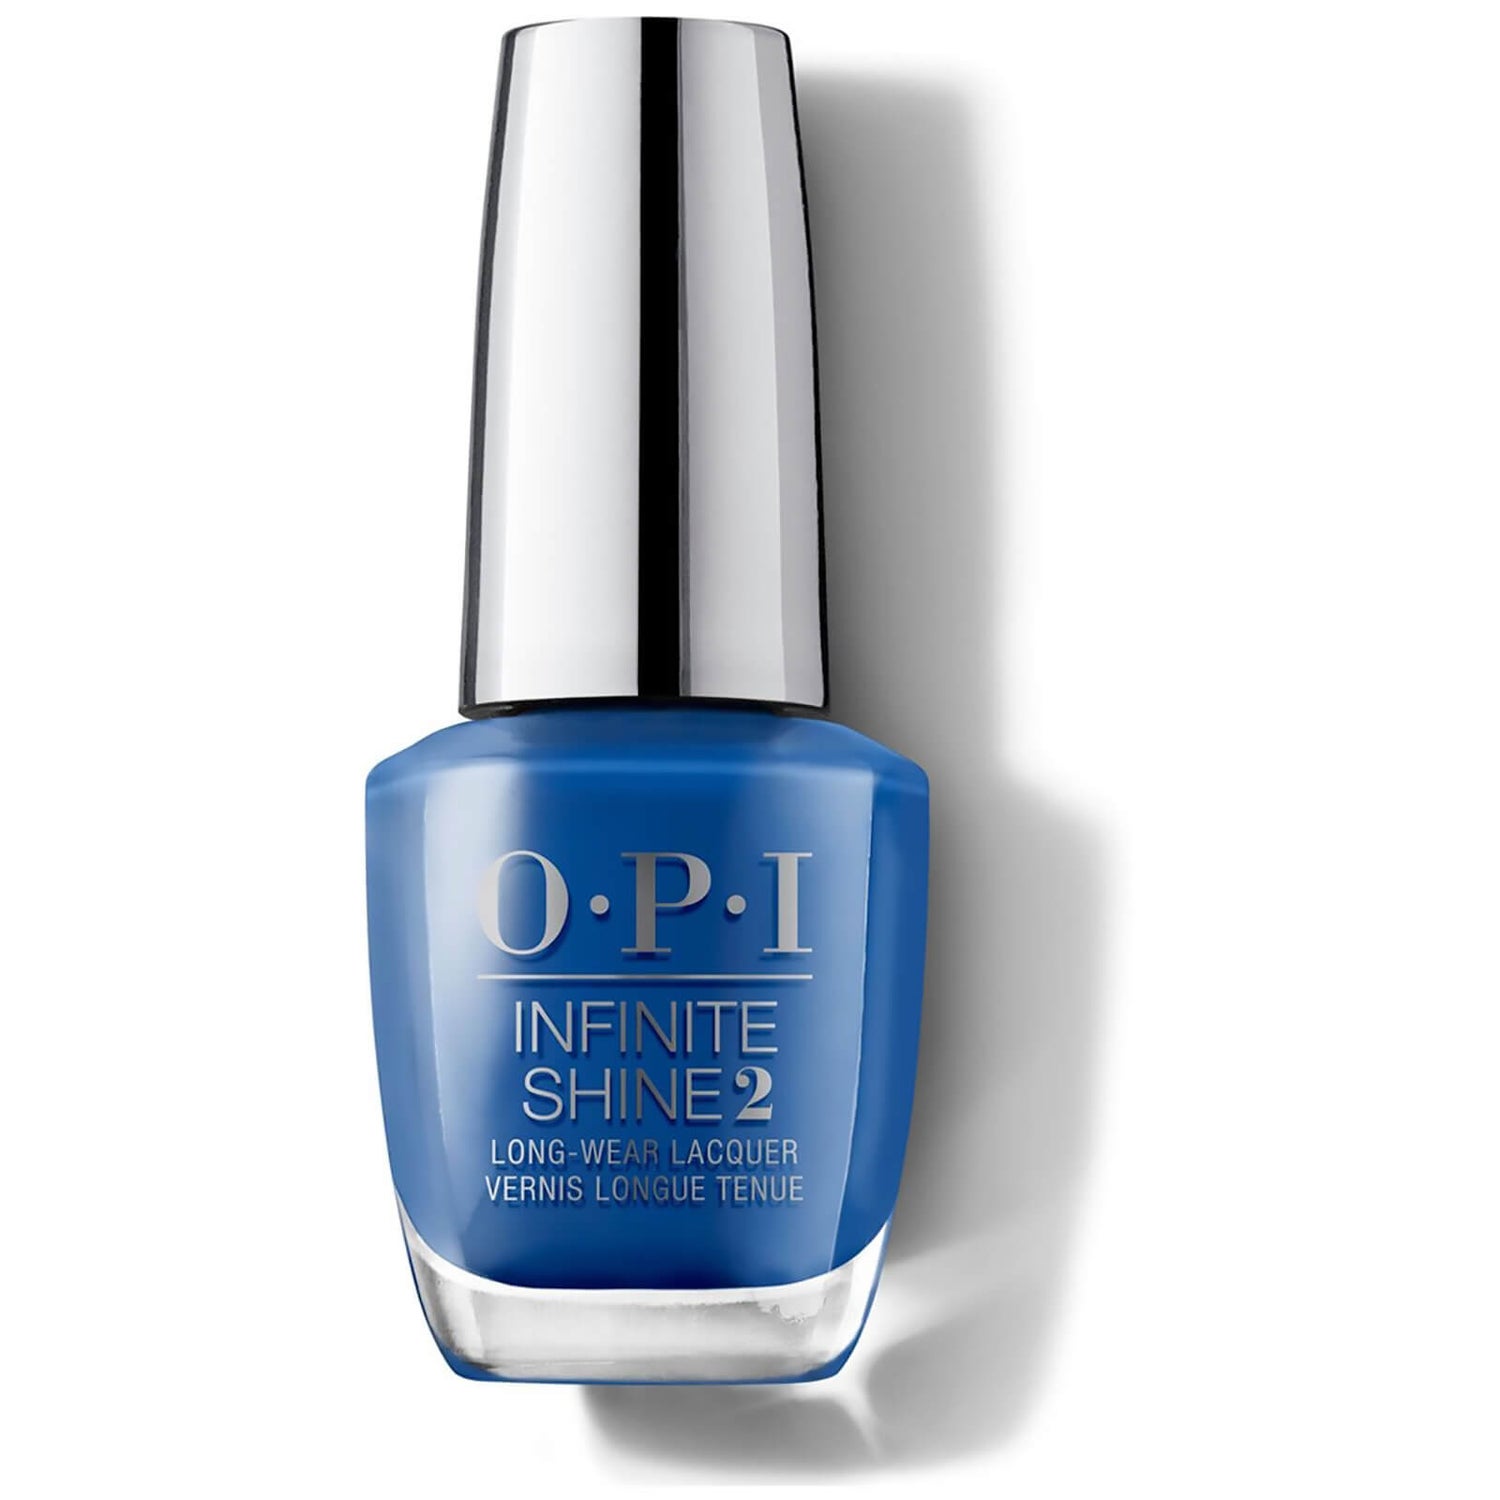 OPI Mexico City Limited Edition Infinite Shine Nail Polish - Mi Casa Es Blue Casa 15ml